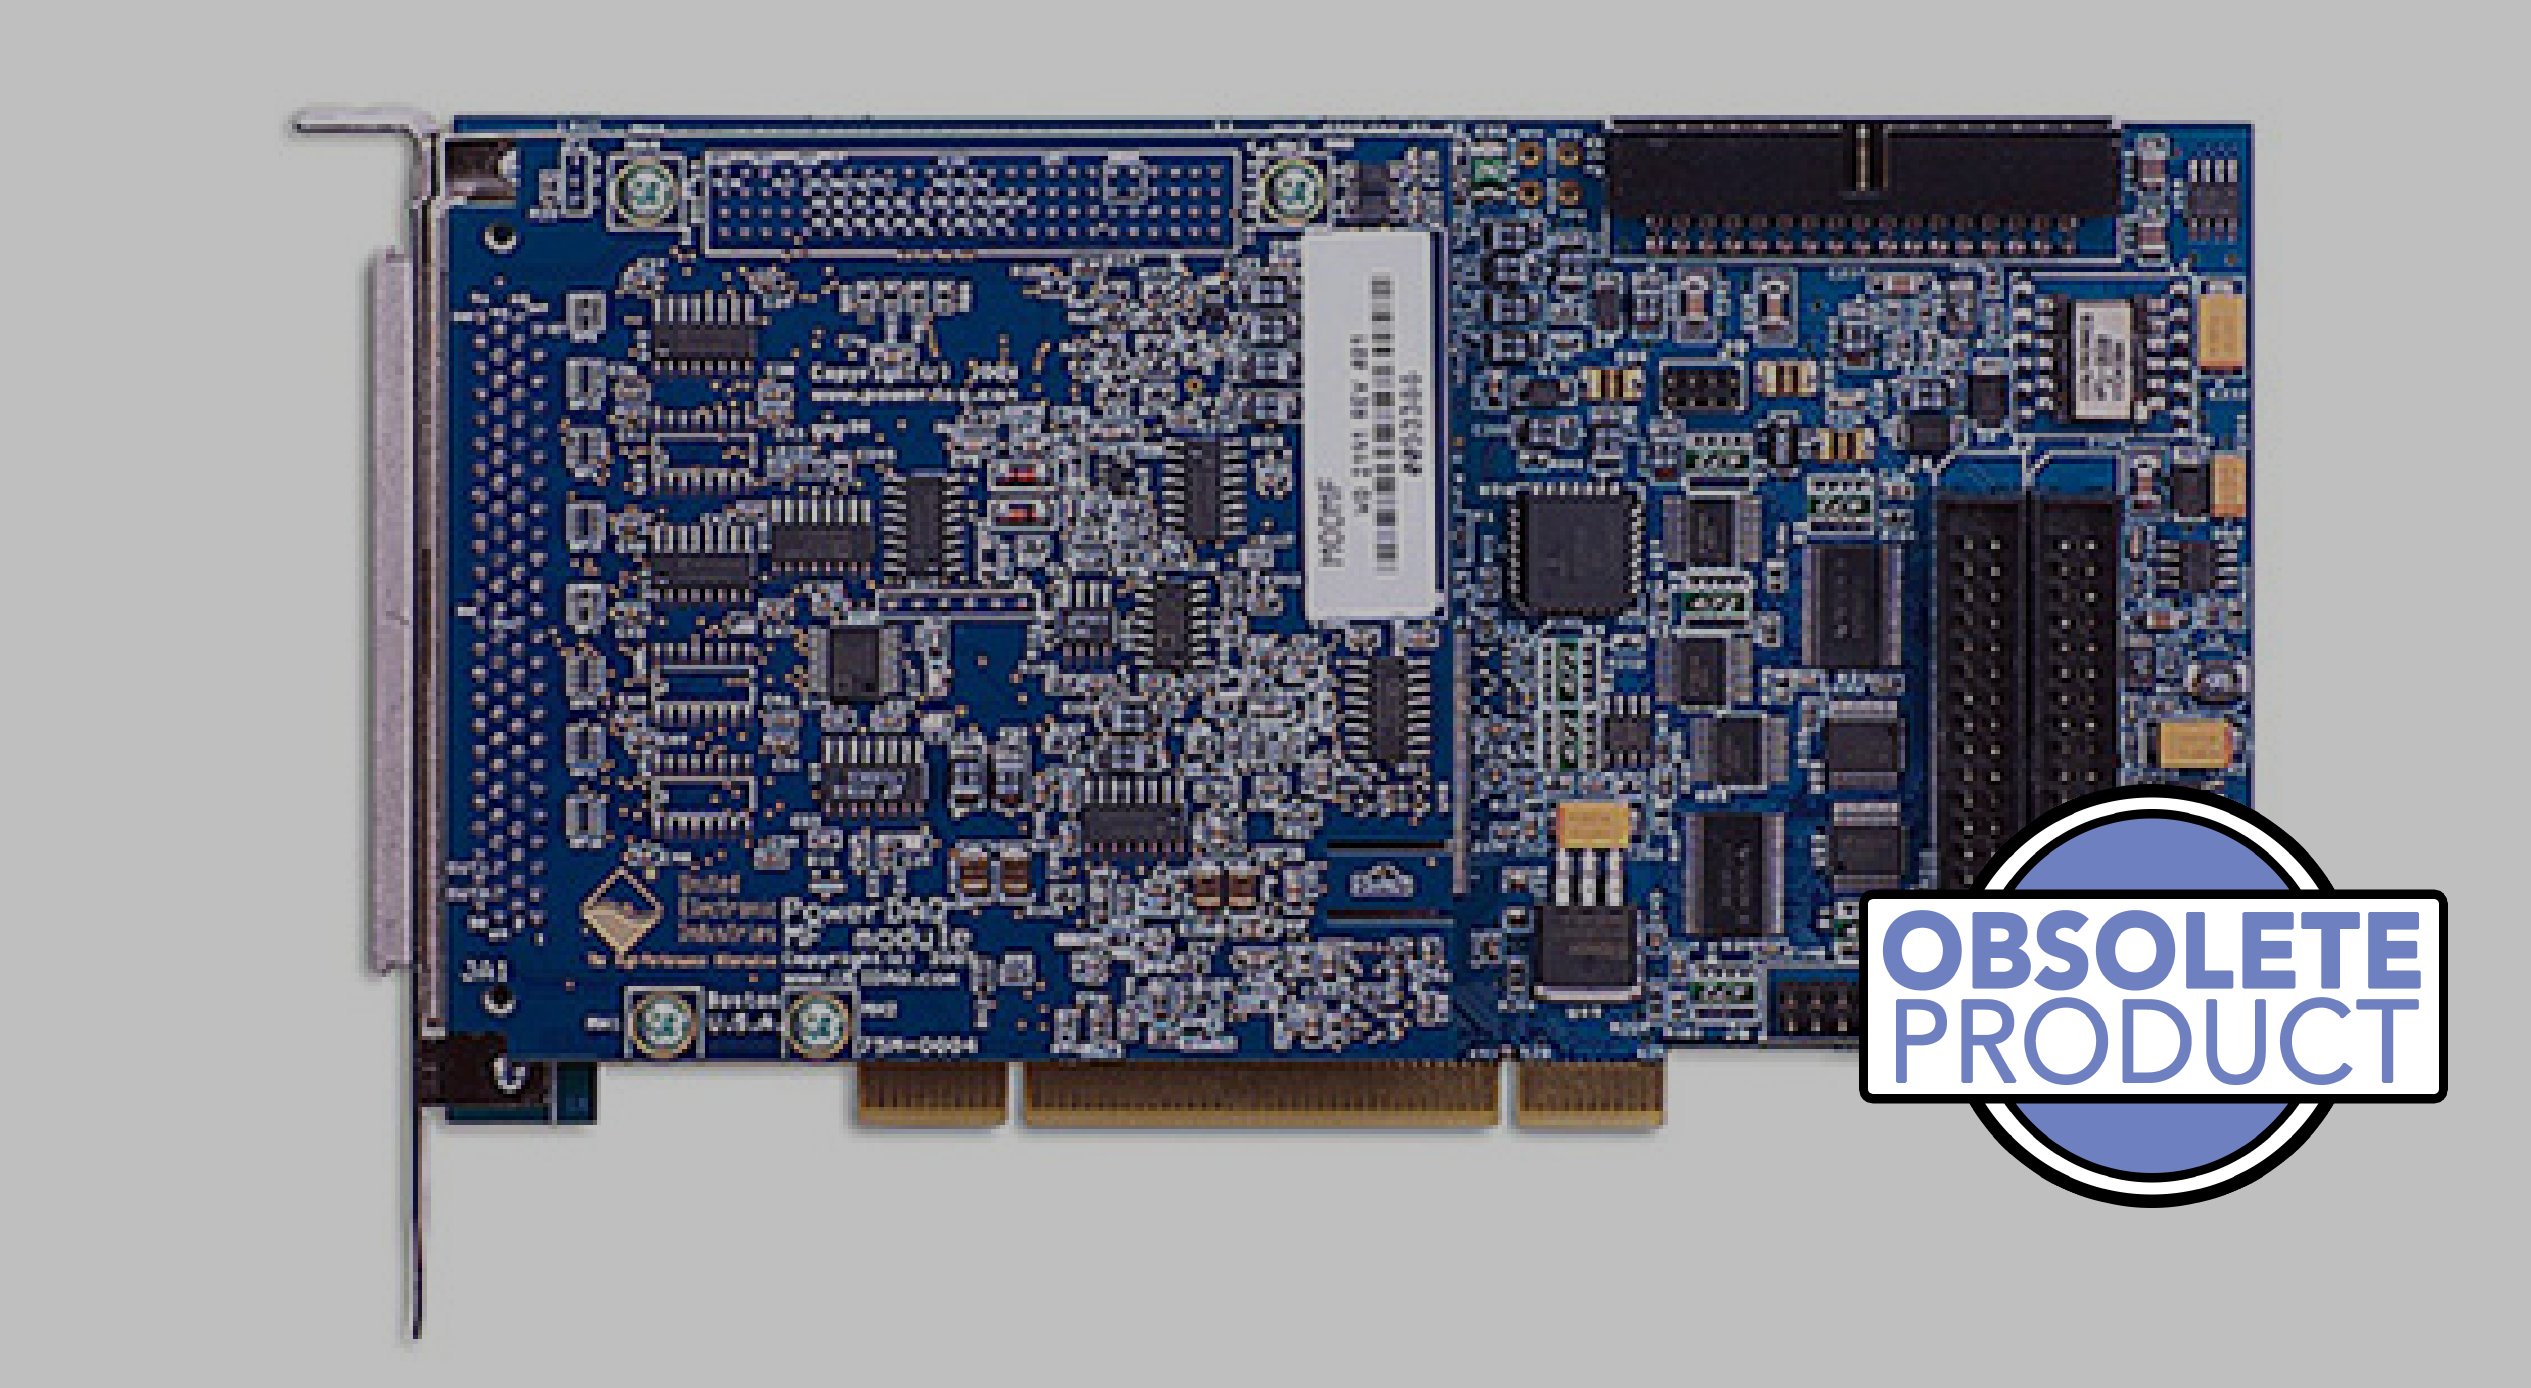 500 kS/s, 16-bit, 1/2/4/8 gains, 16SE/8DI A/D PCI multifunction board